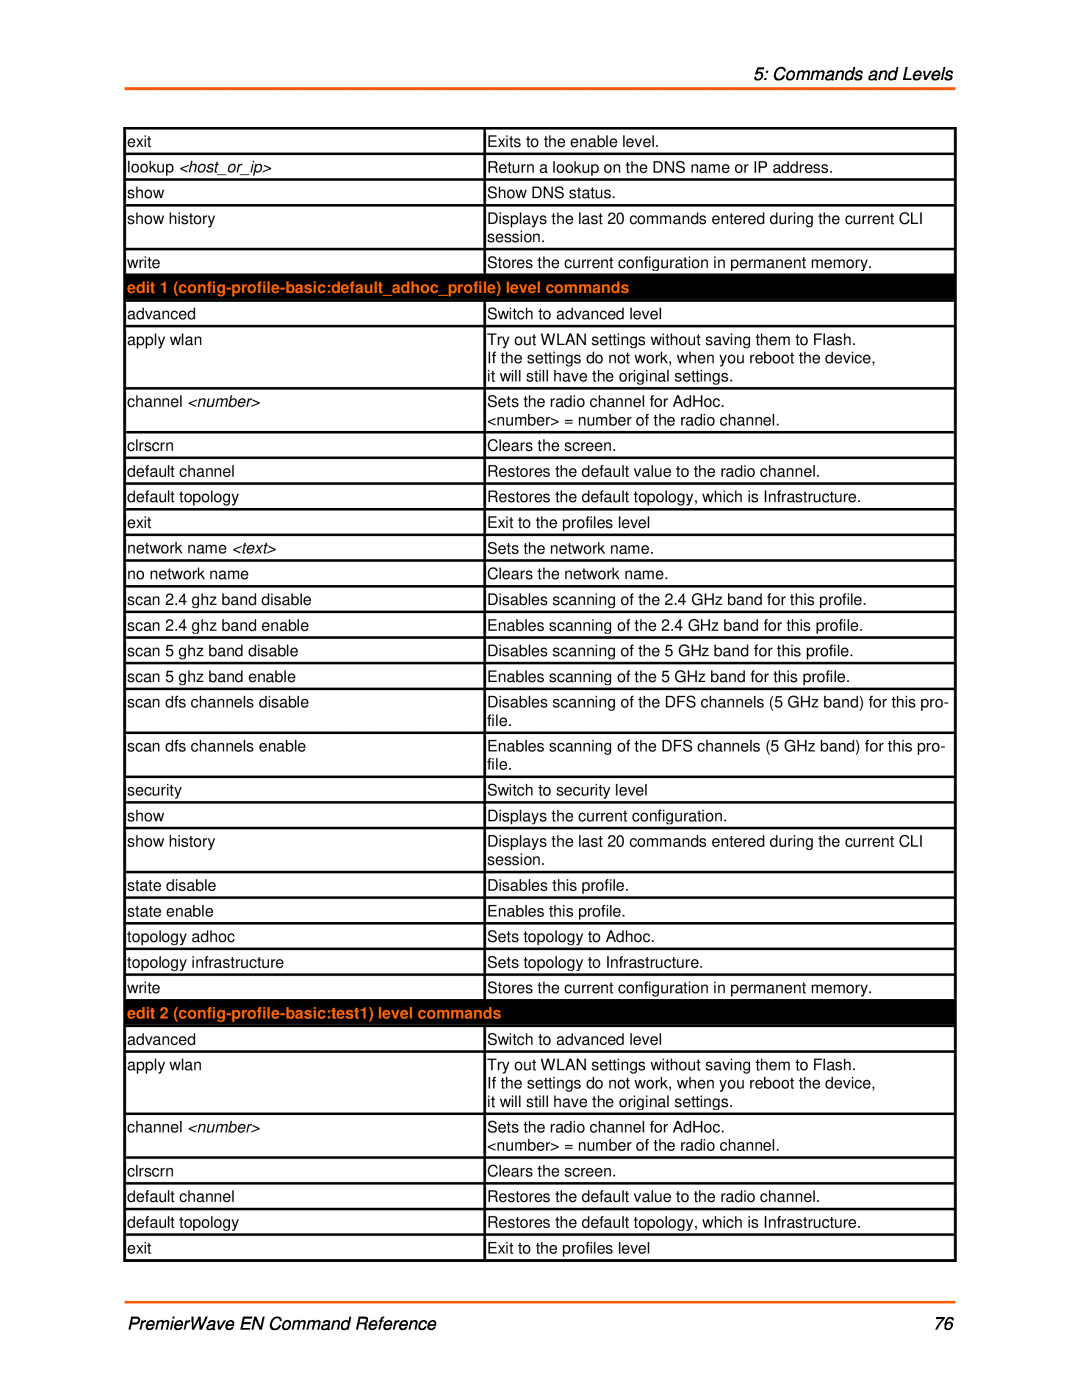 Lantronix 900-581 manual Commands and Levels, PremierWave EN Command Reference, lookup hostorip 